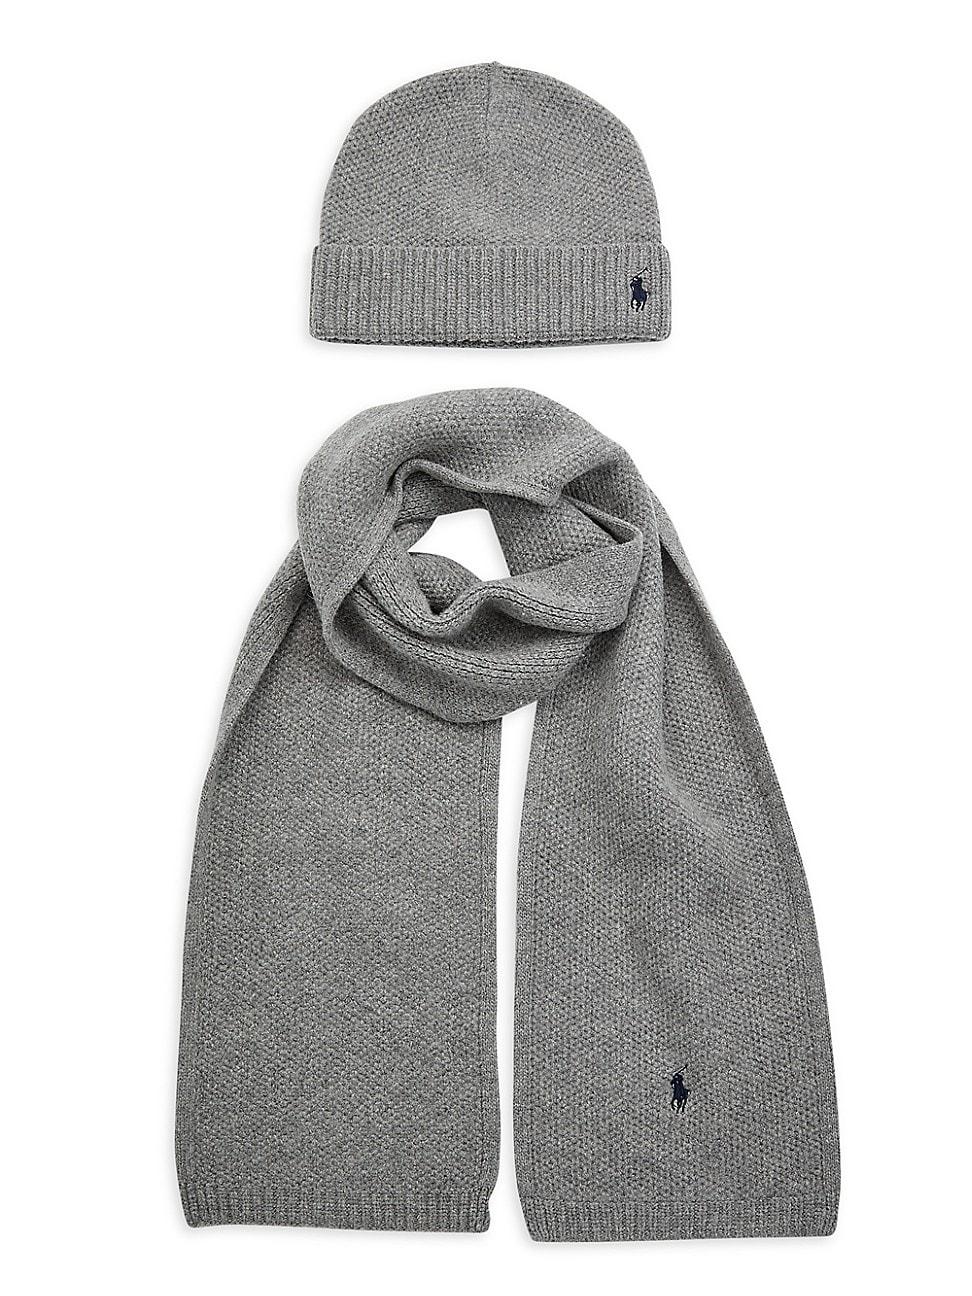 Polo Ralph Lauren 2-piece Textured Hat & Scarf Set in Gray for Men